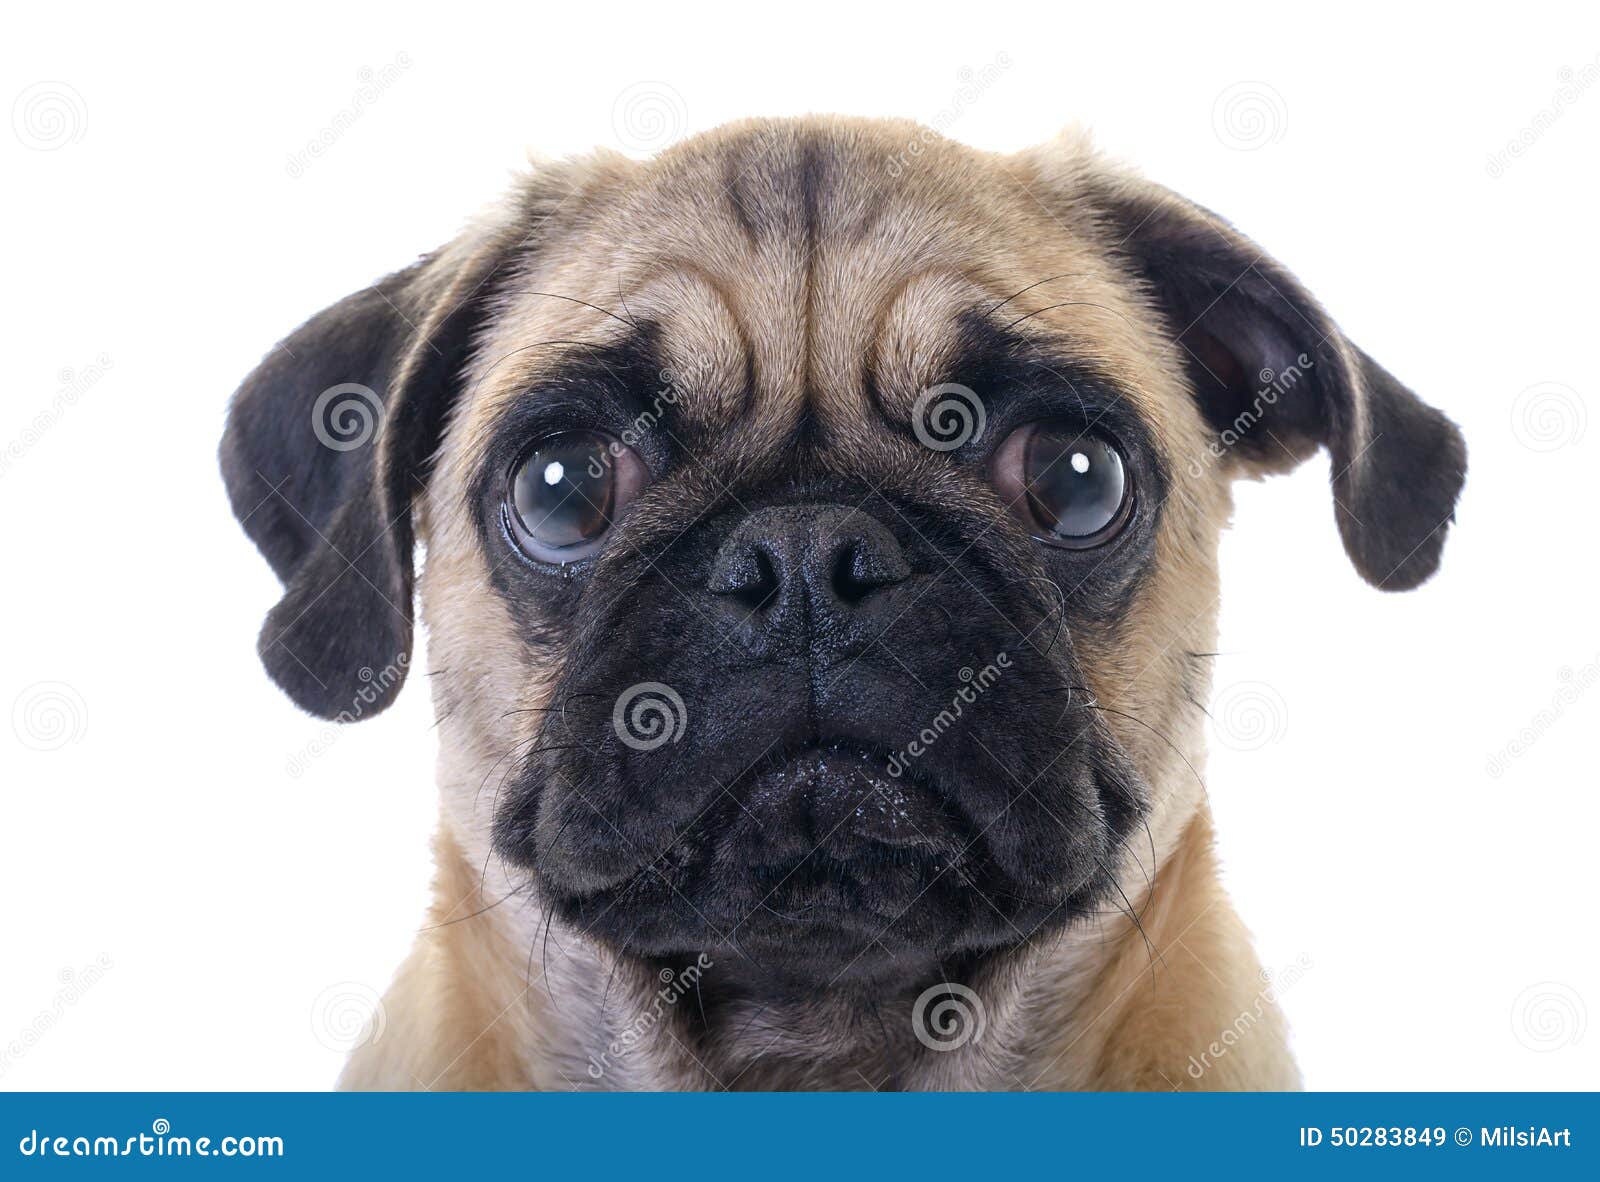 Crying Pug Dog stock image. Image of obey, face, puglet - 50283849